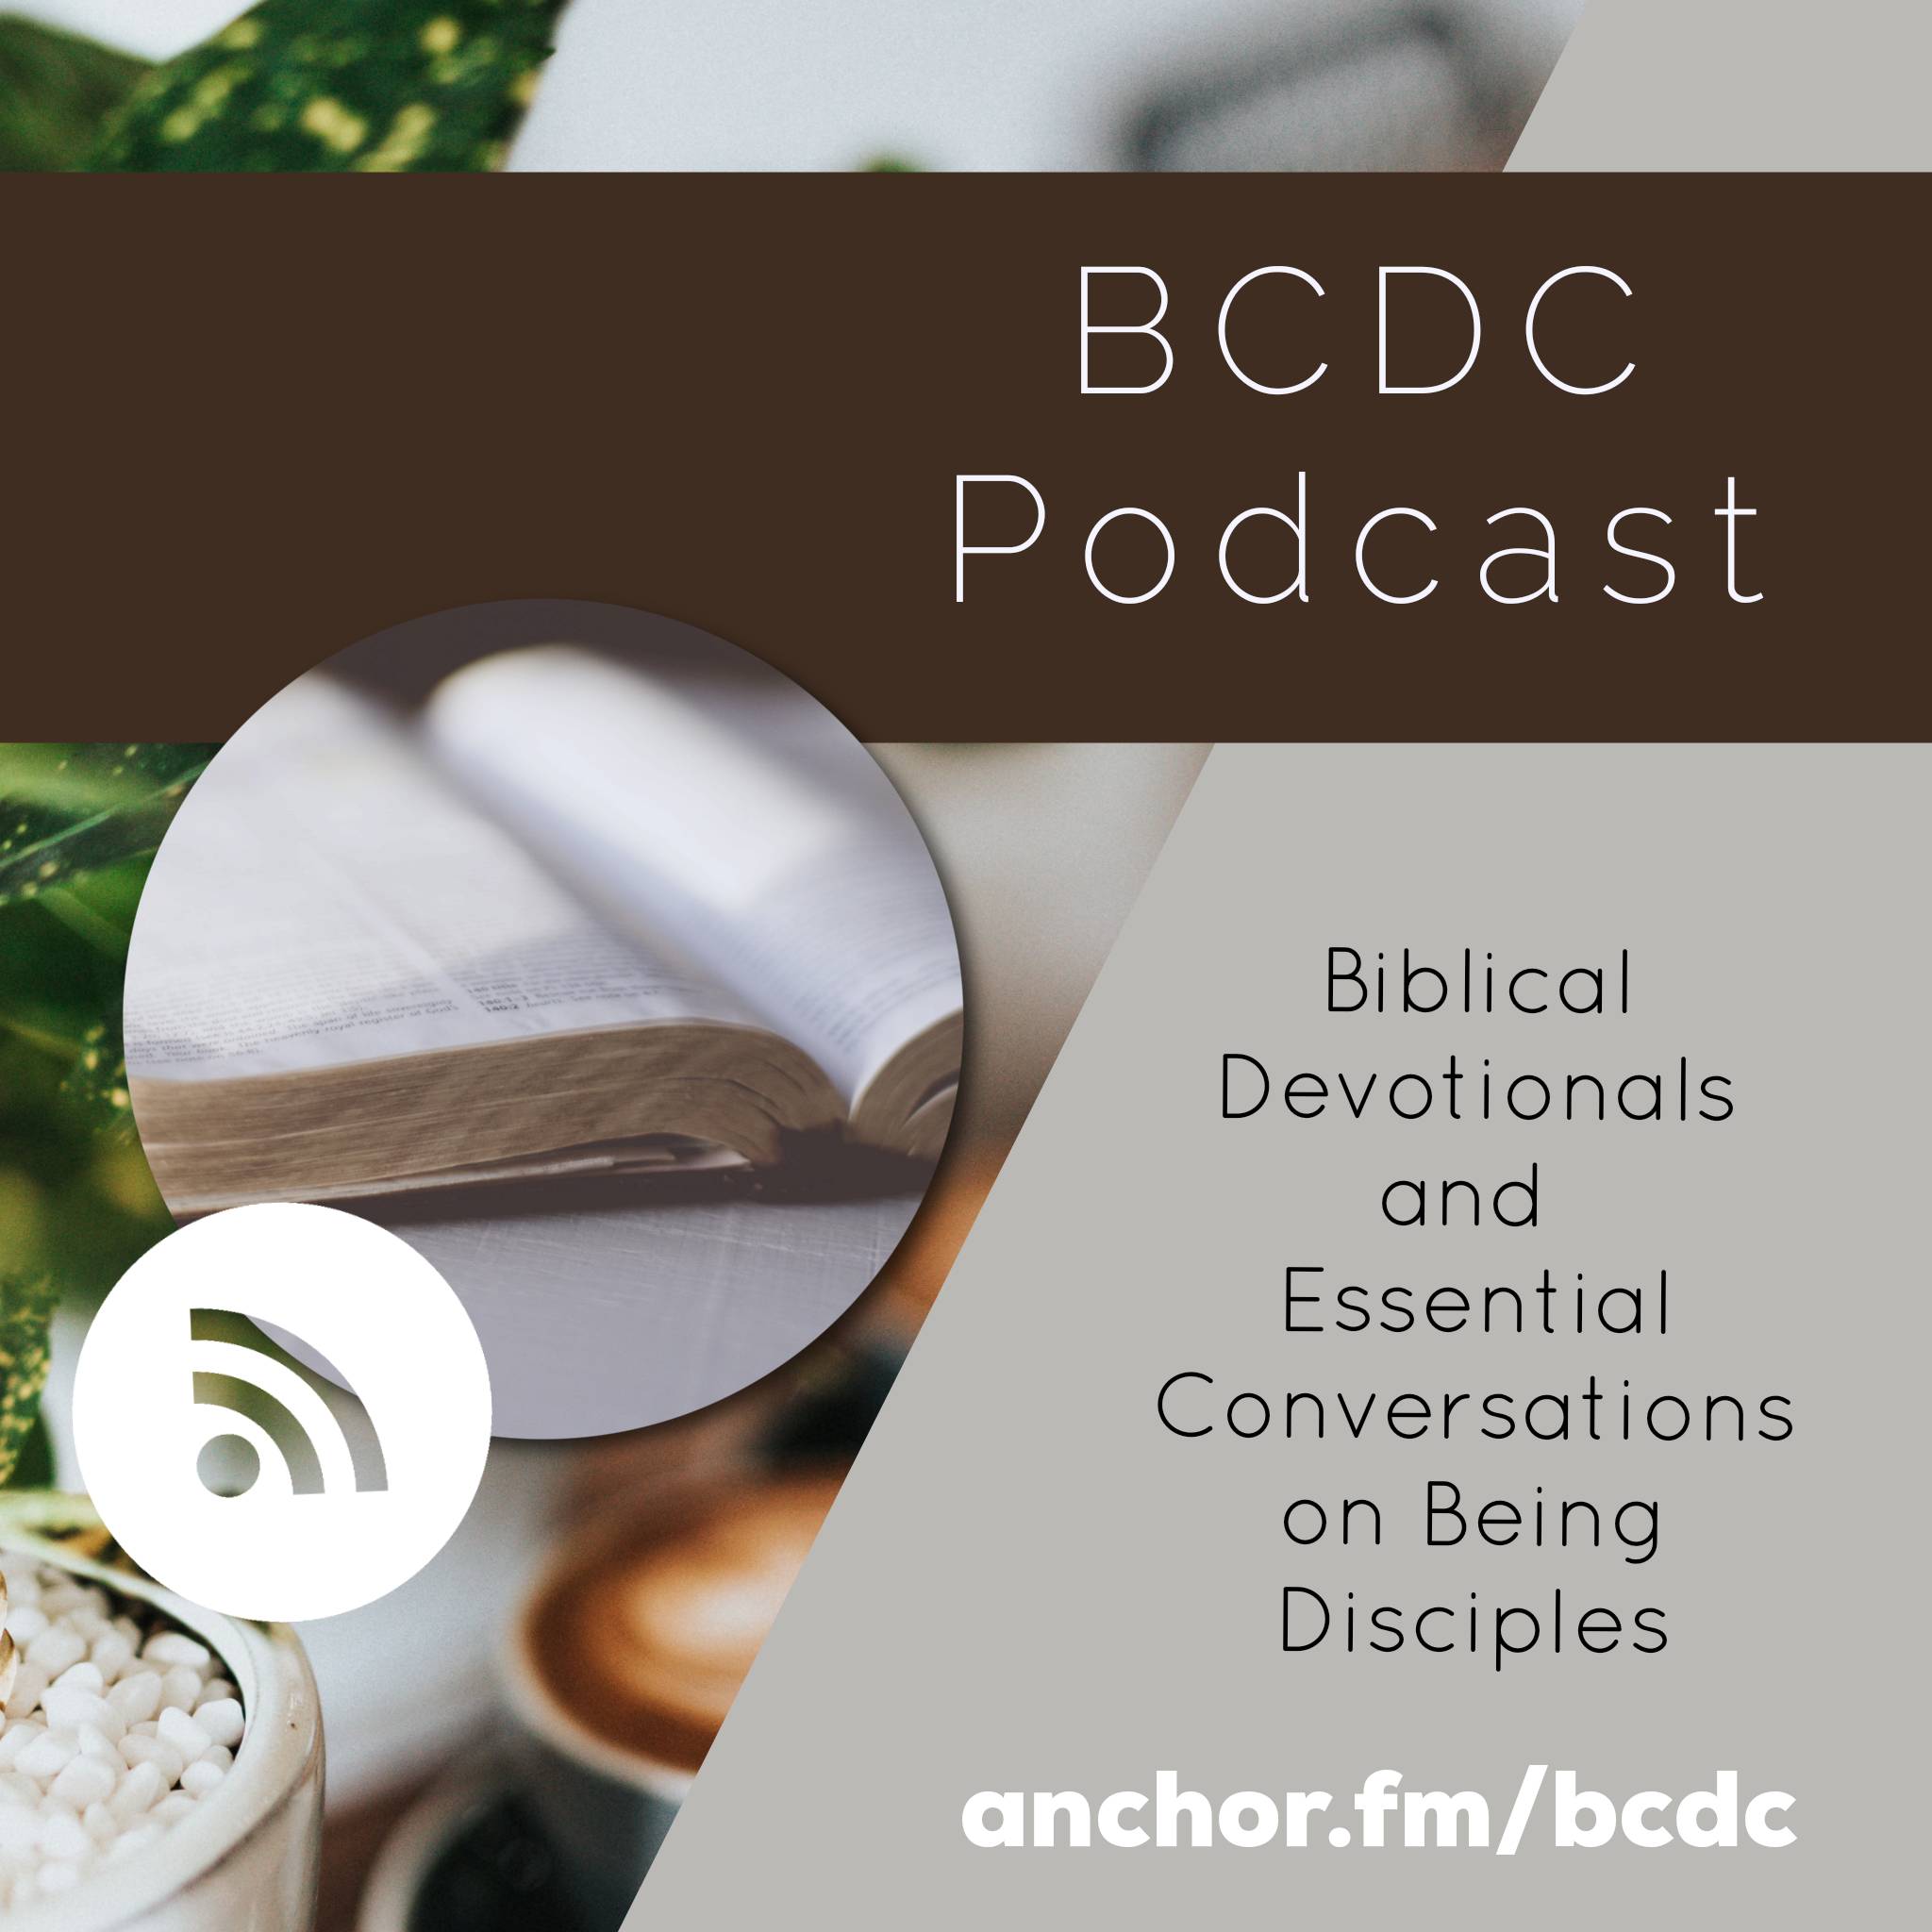 BCDC Podcast